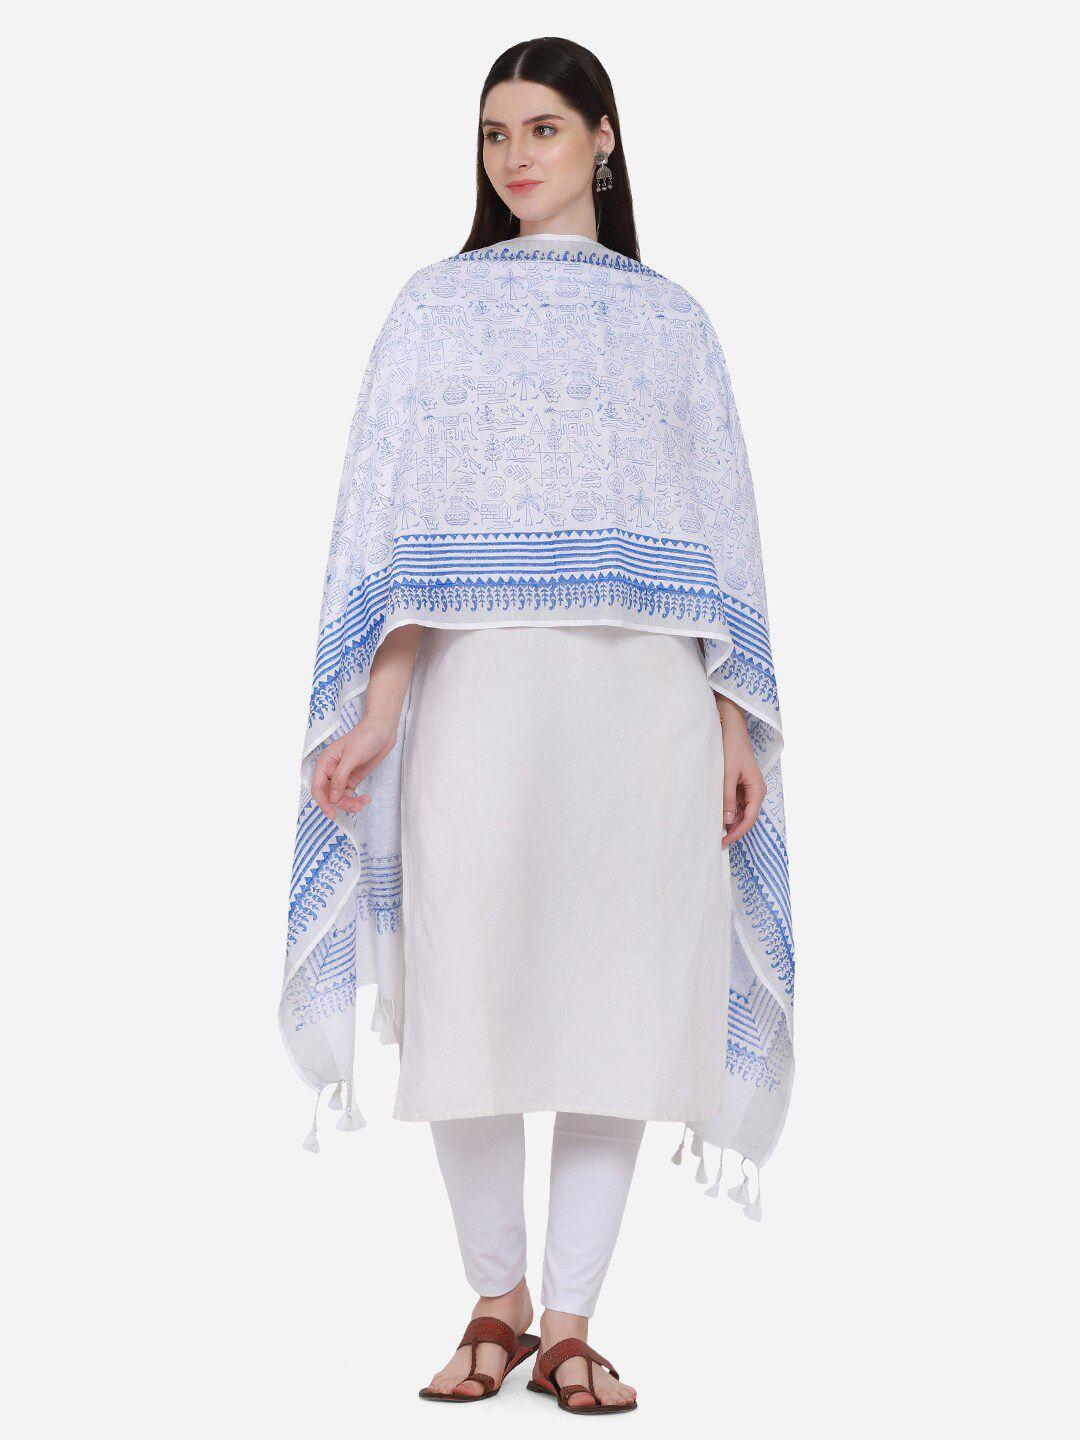 the-weave-traveller-white-&-blue-ethnic-motifs-printed-dupatta